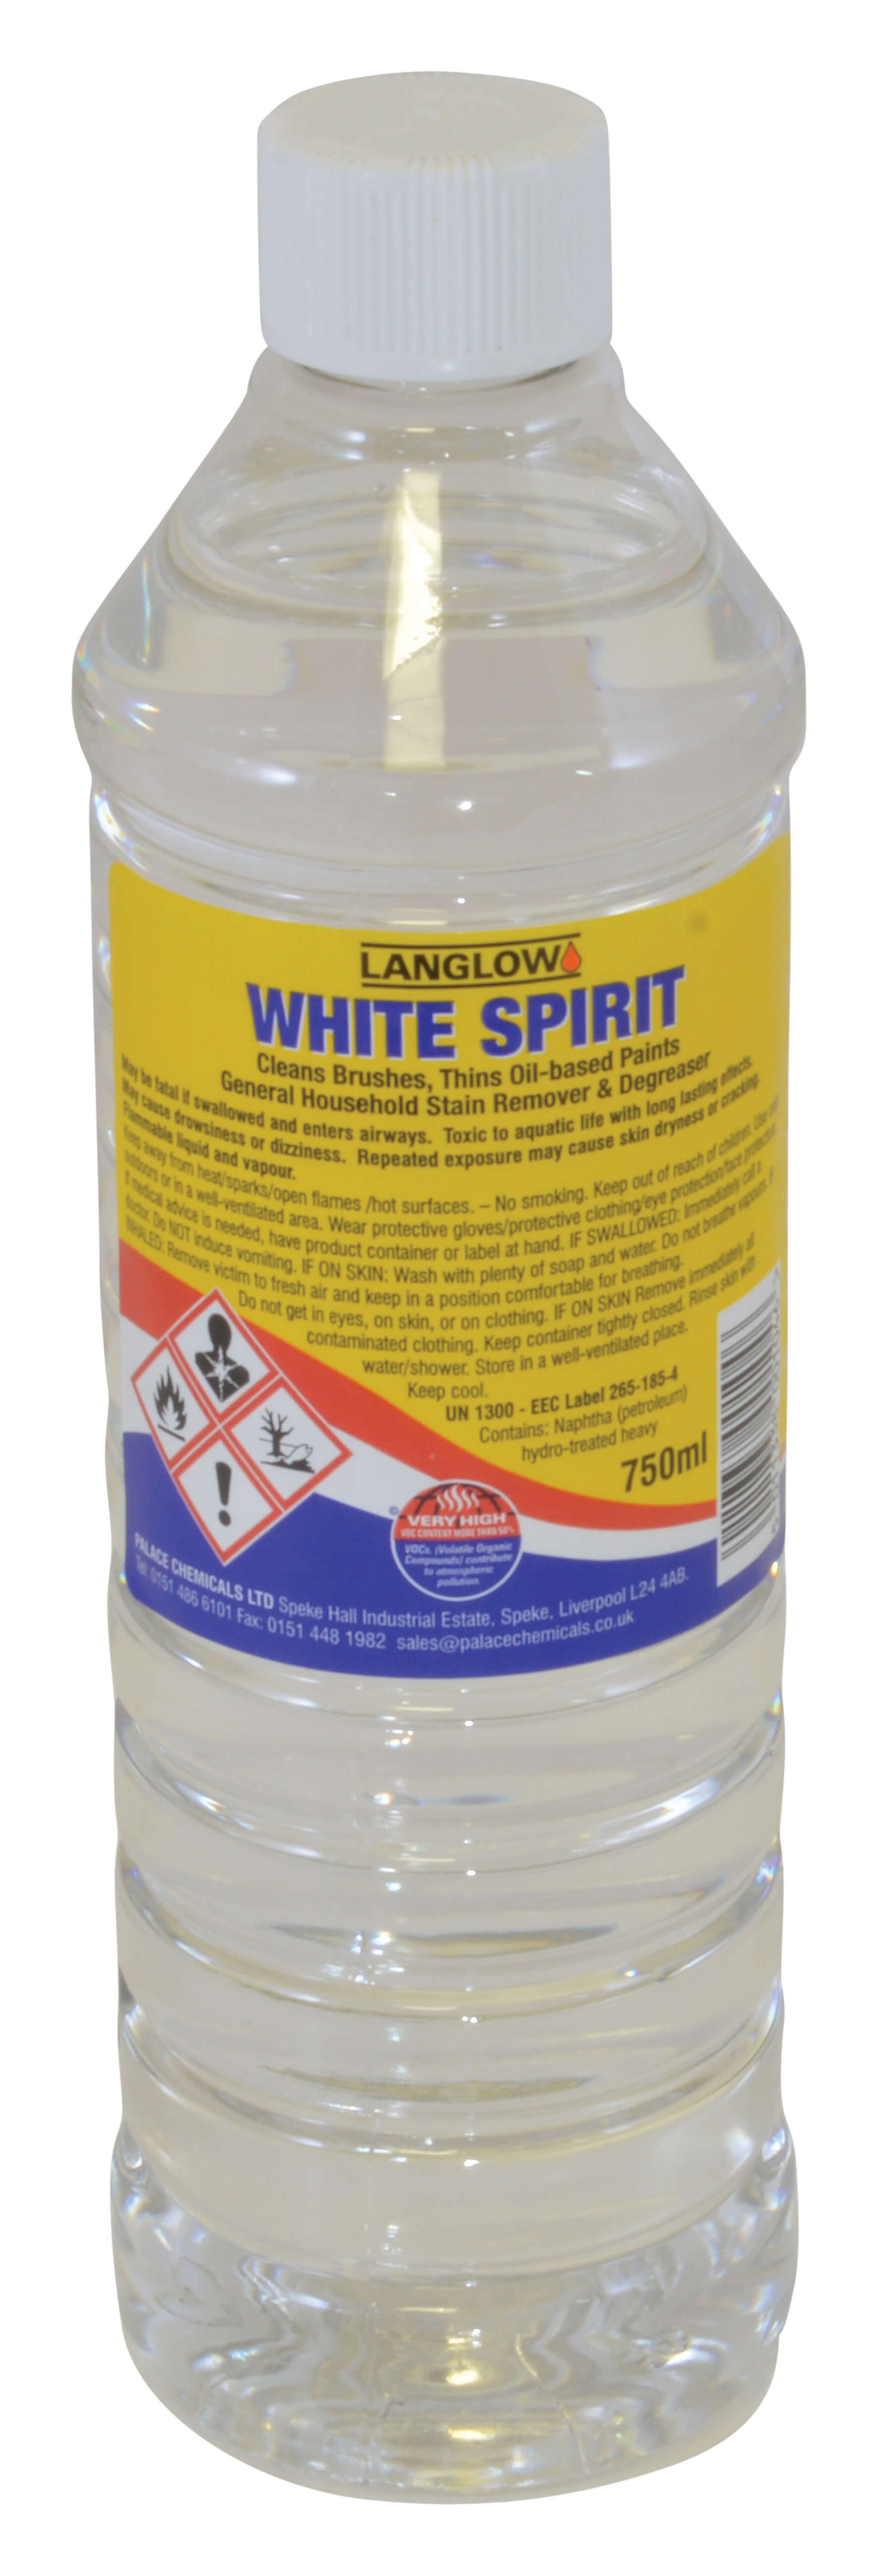 White Spirit 750ml Solvents Finishes Consumables Tilgear